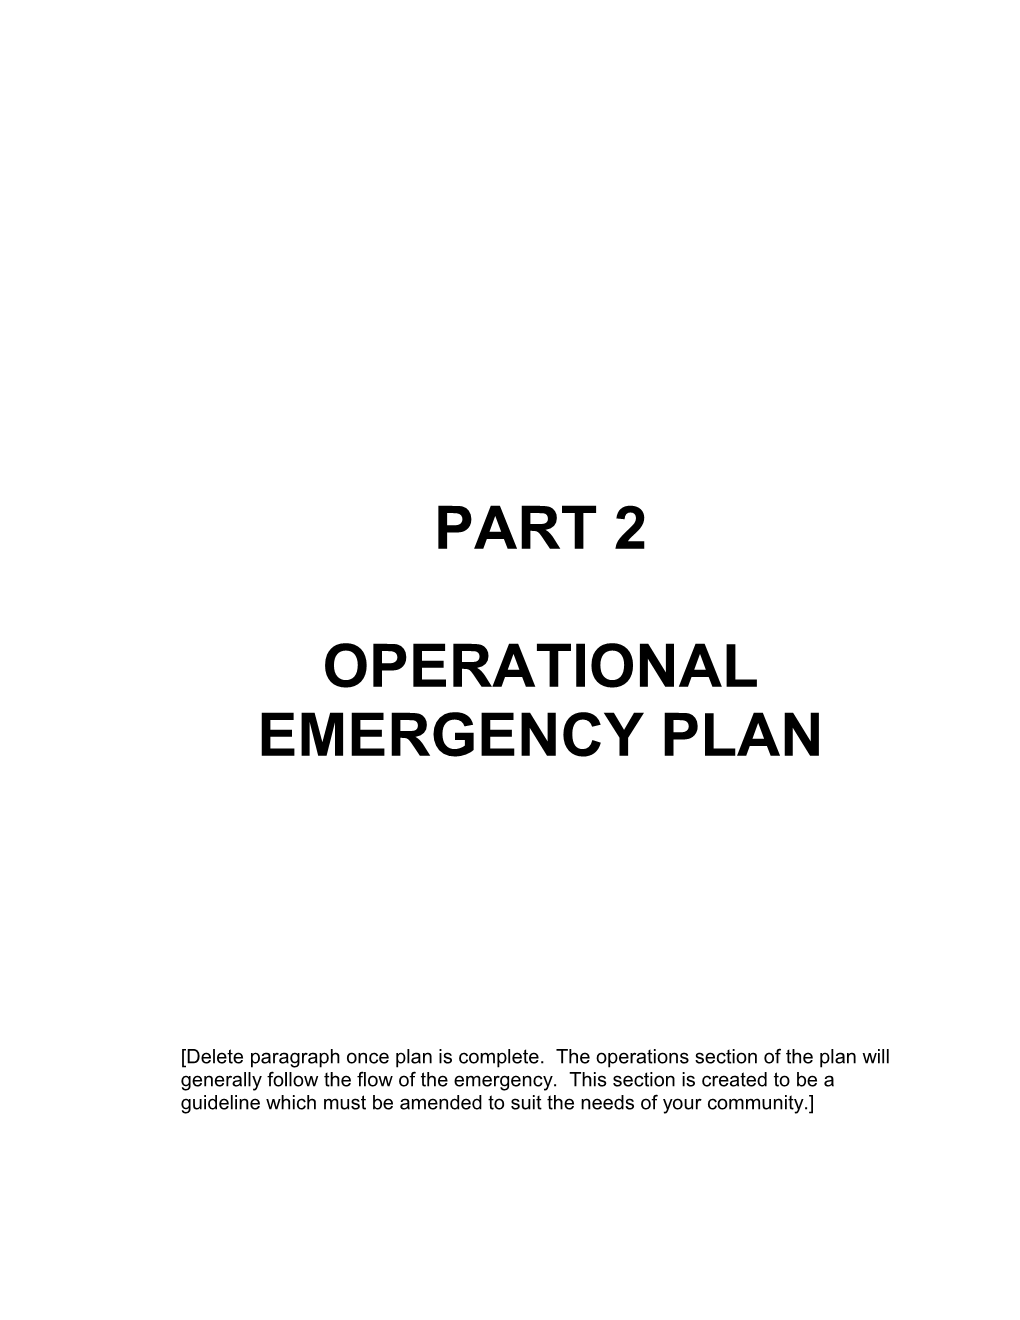 Operational Emergency Plan